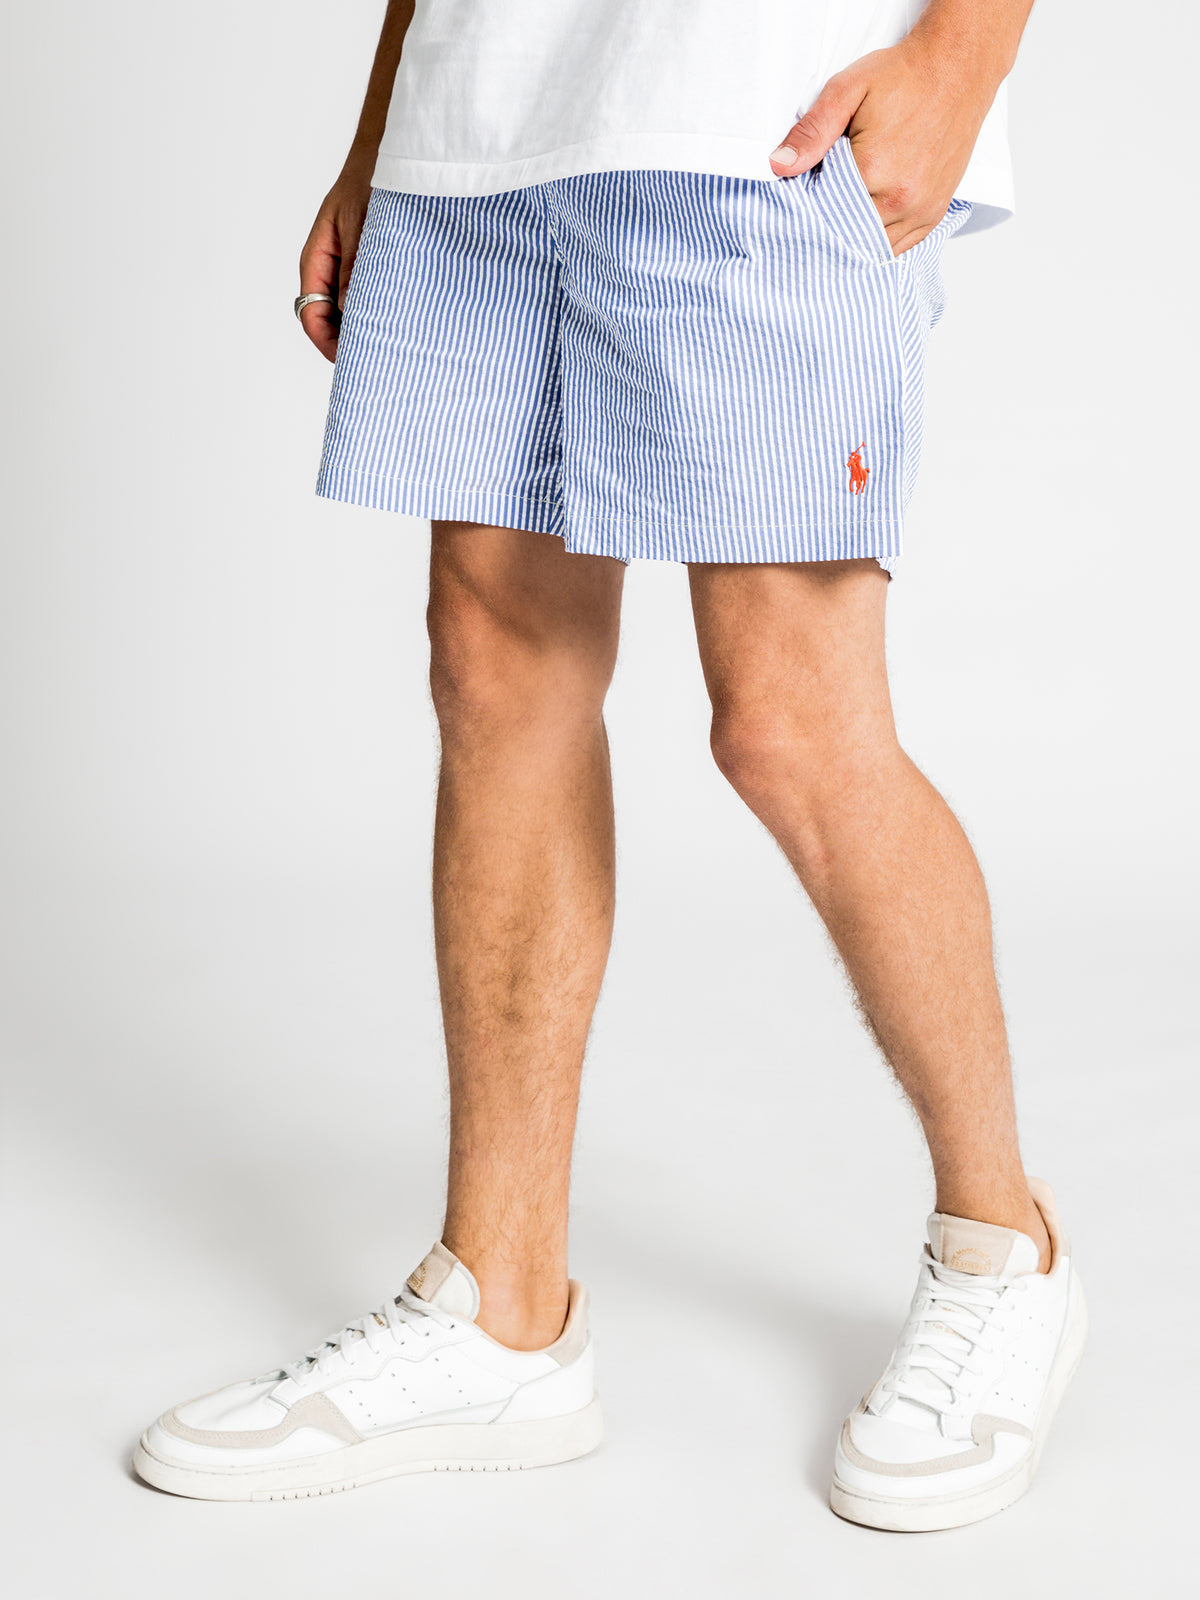 Traveller Shorts in Blue Stripe